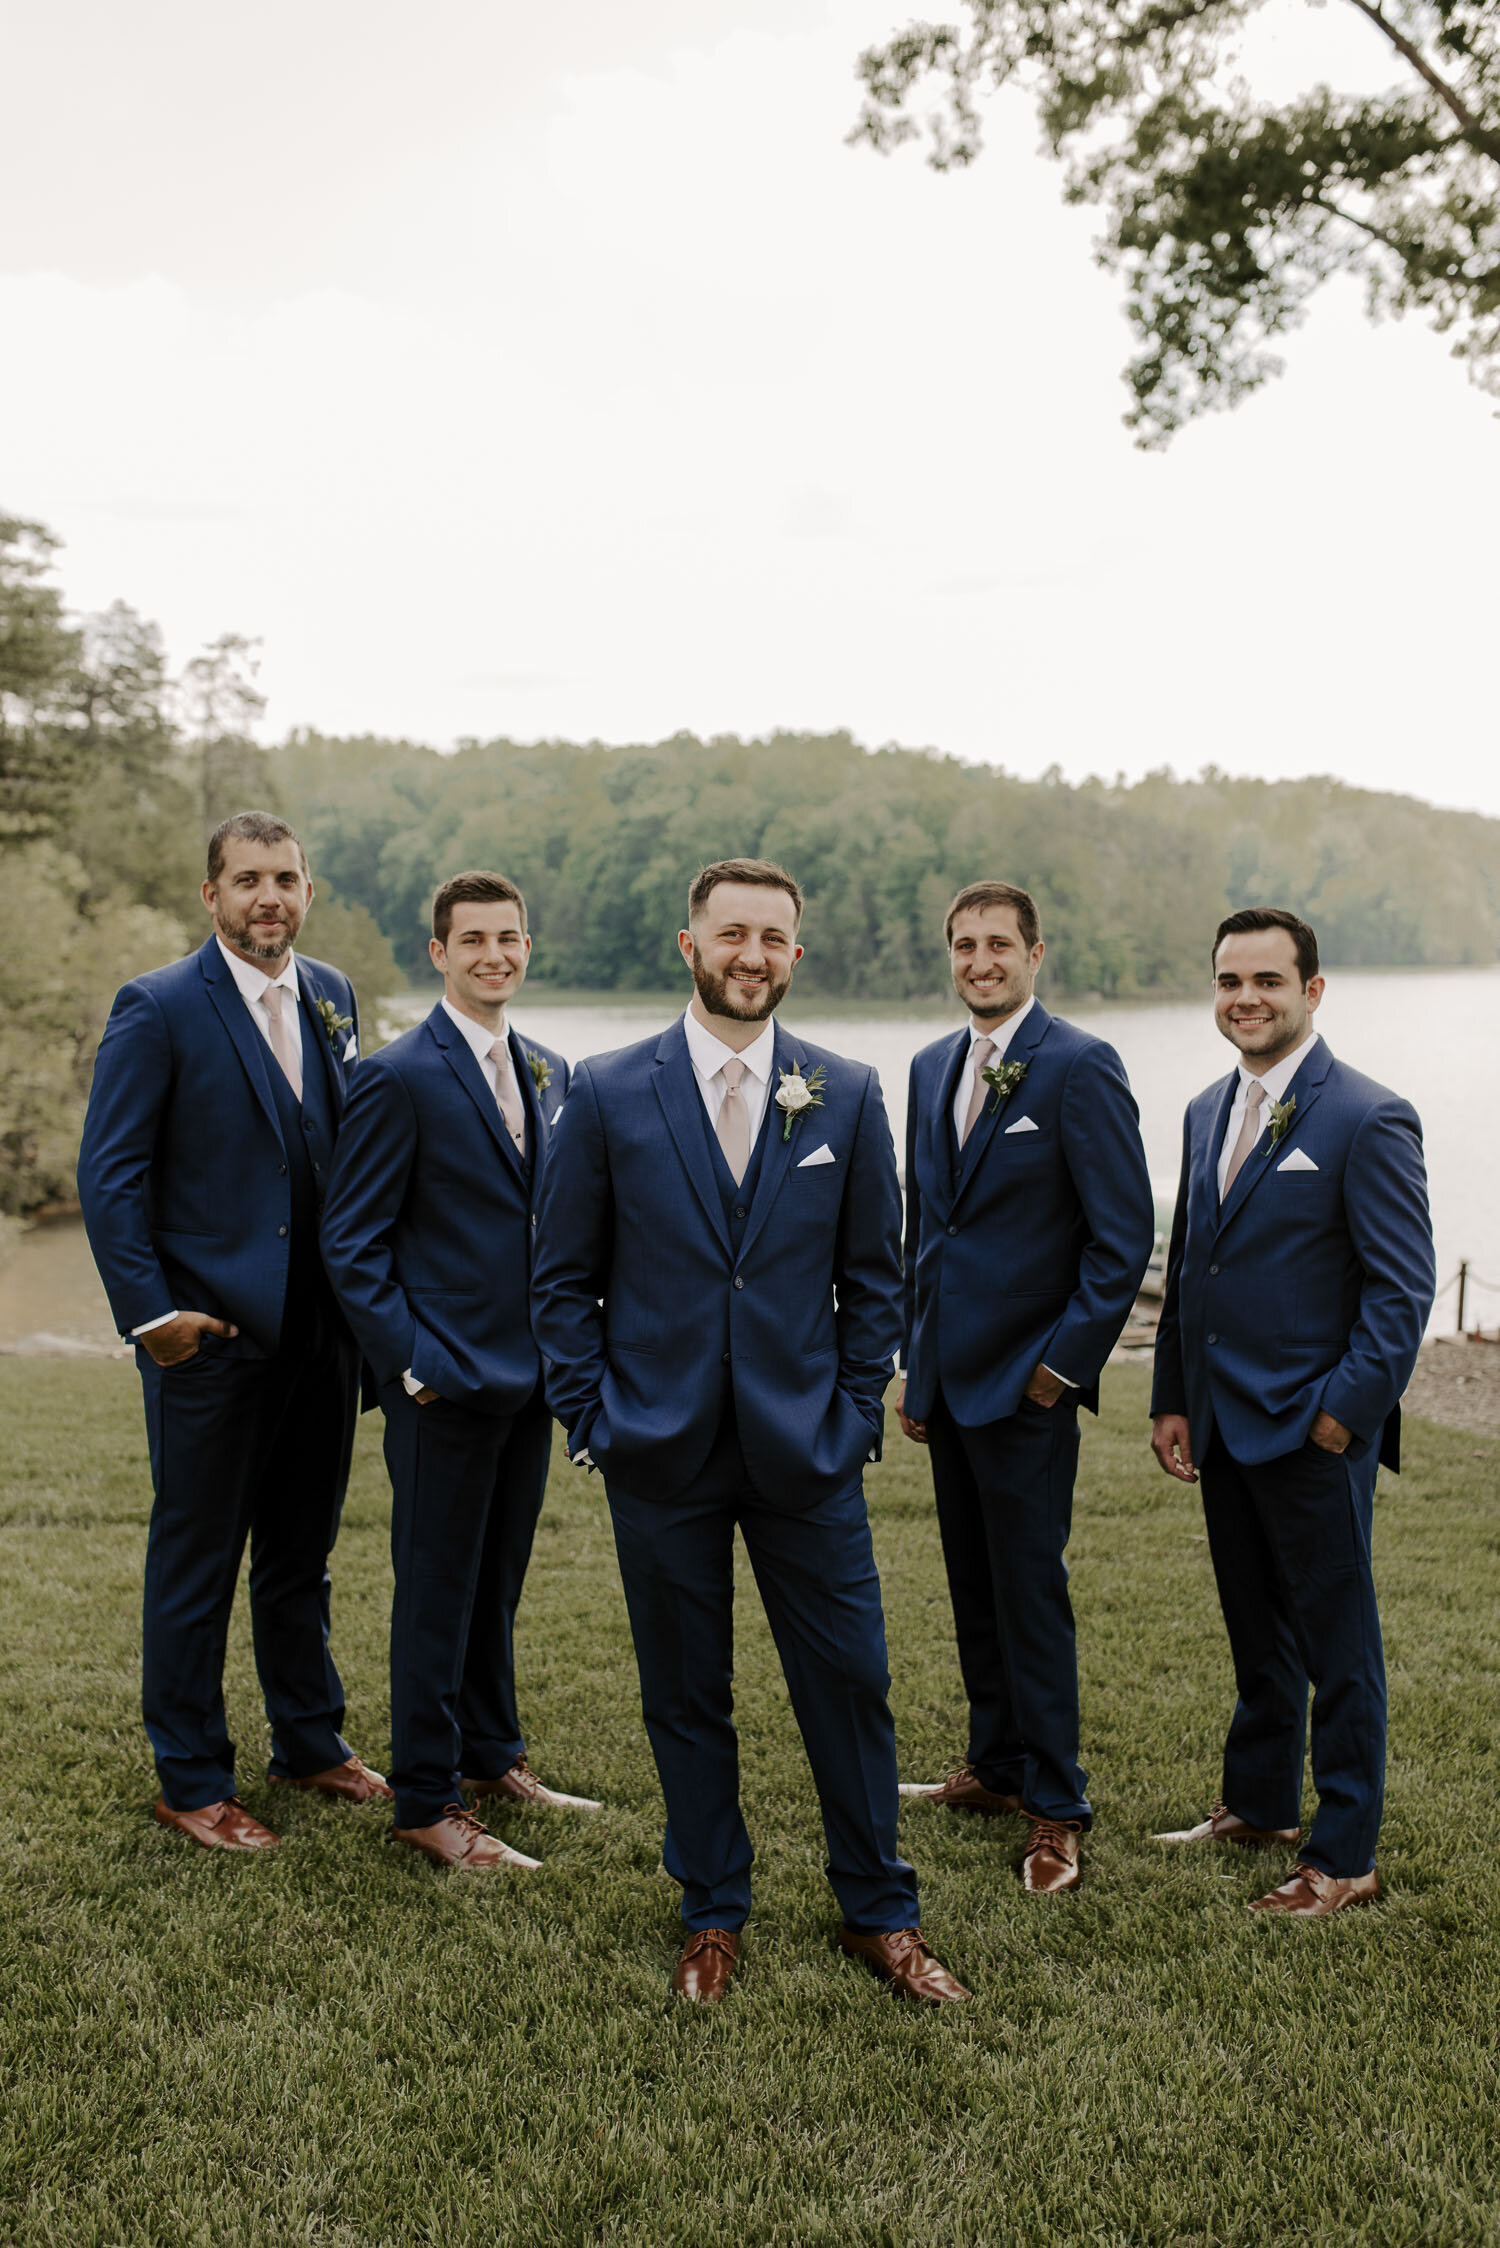 Greensboro Winston-Salem, NC Summer Wedding at Bella Collina by Kayli LaFon Photography | North Carolina based Intimate Wedding & Elopement Photographer